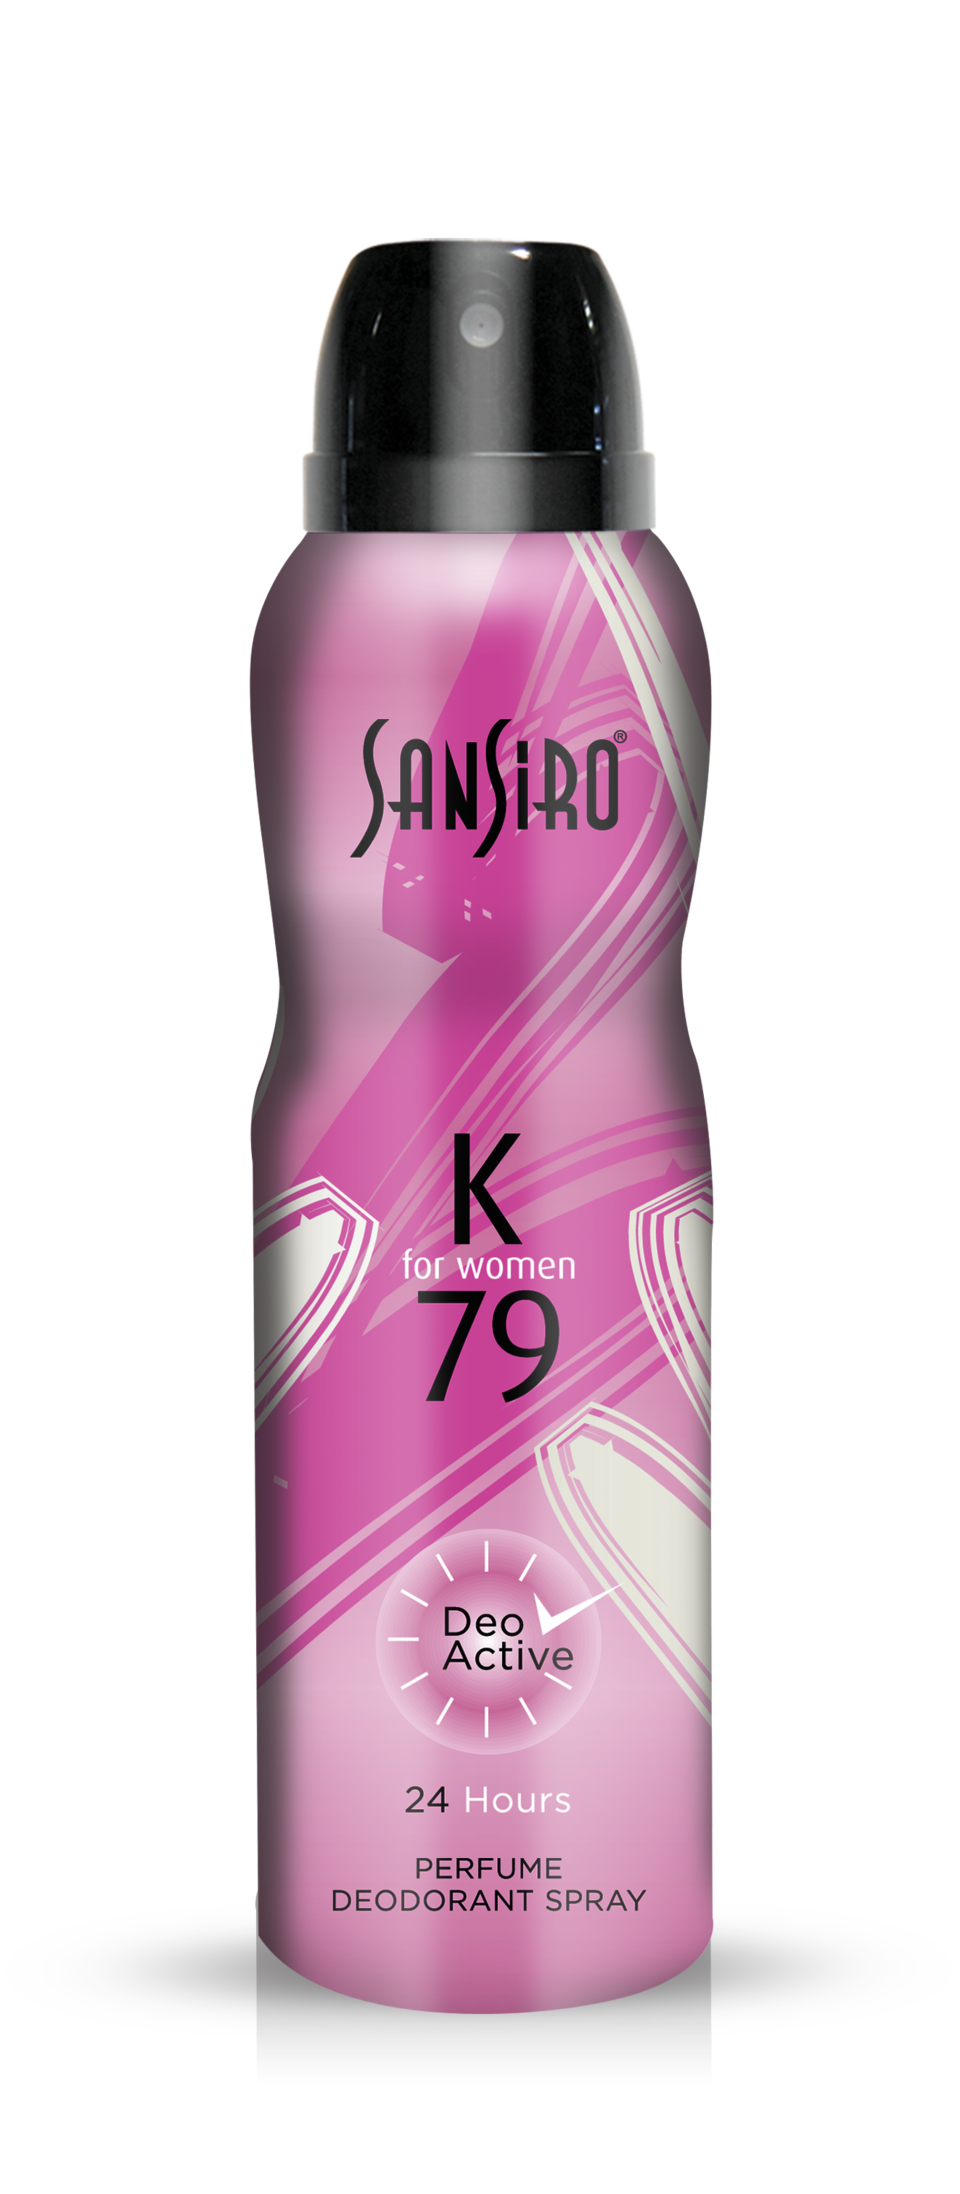 Sansiro Perfume - Deo For Women - Deodorant K79